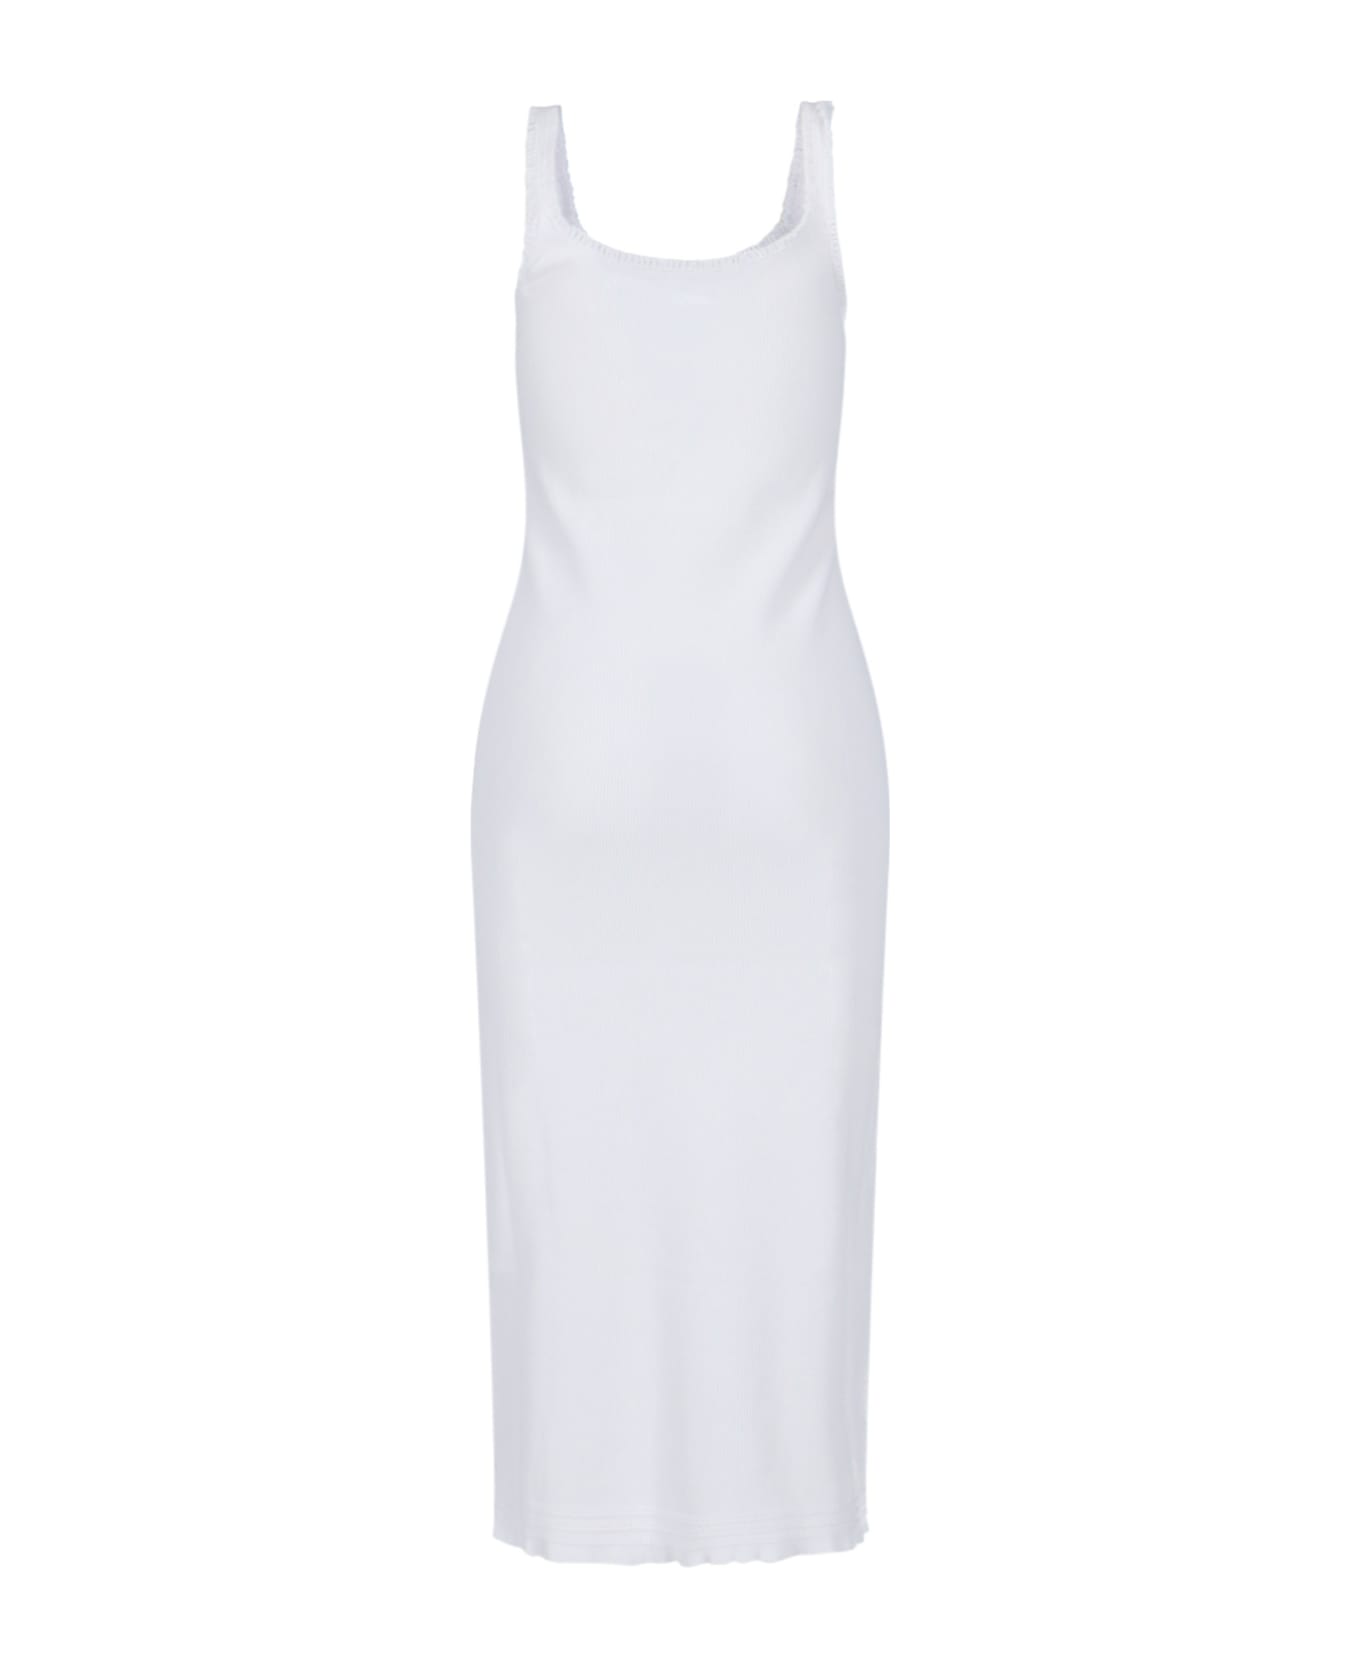 Chloé Ribbed Sleeveless Dress - White